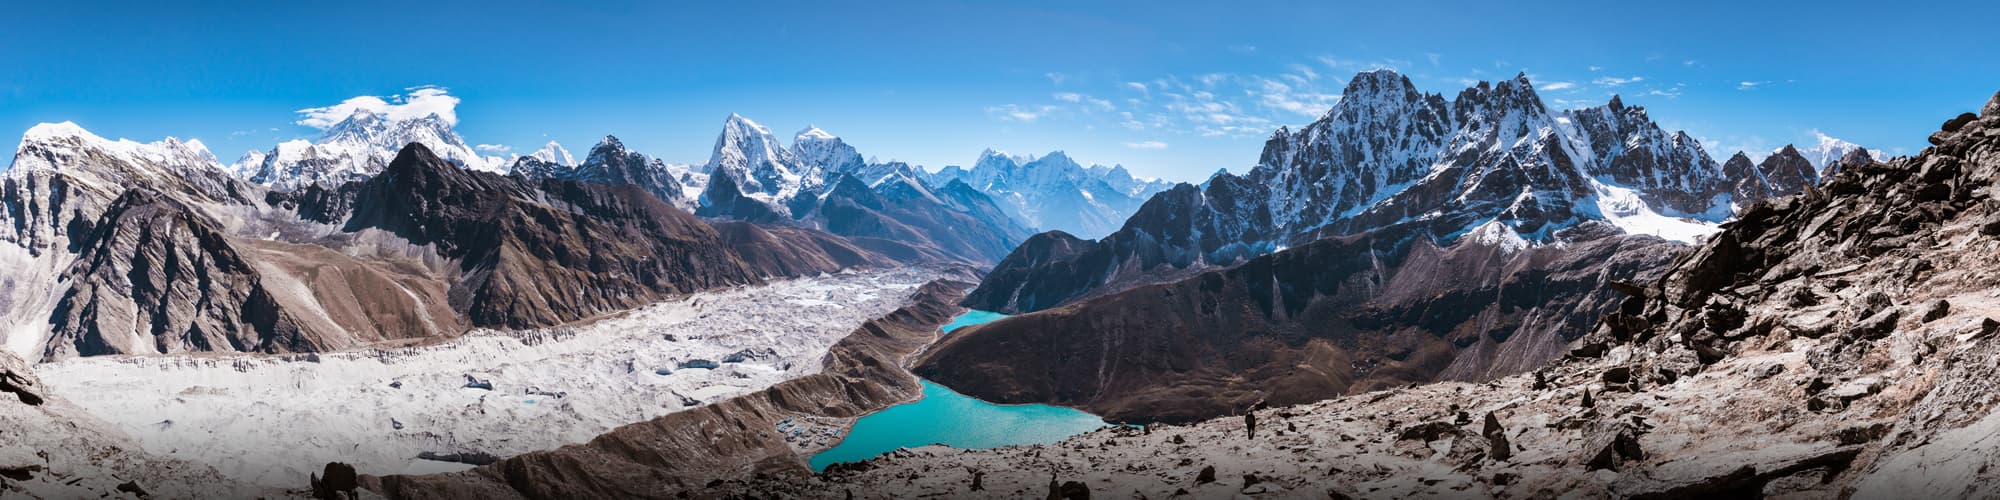 Voyage liberté Annapurnas © Thrithot / Adobe Stock